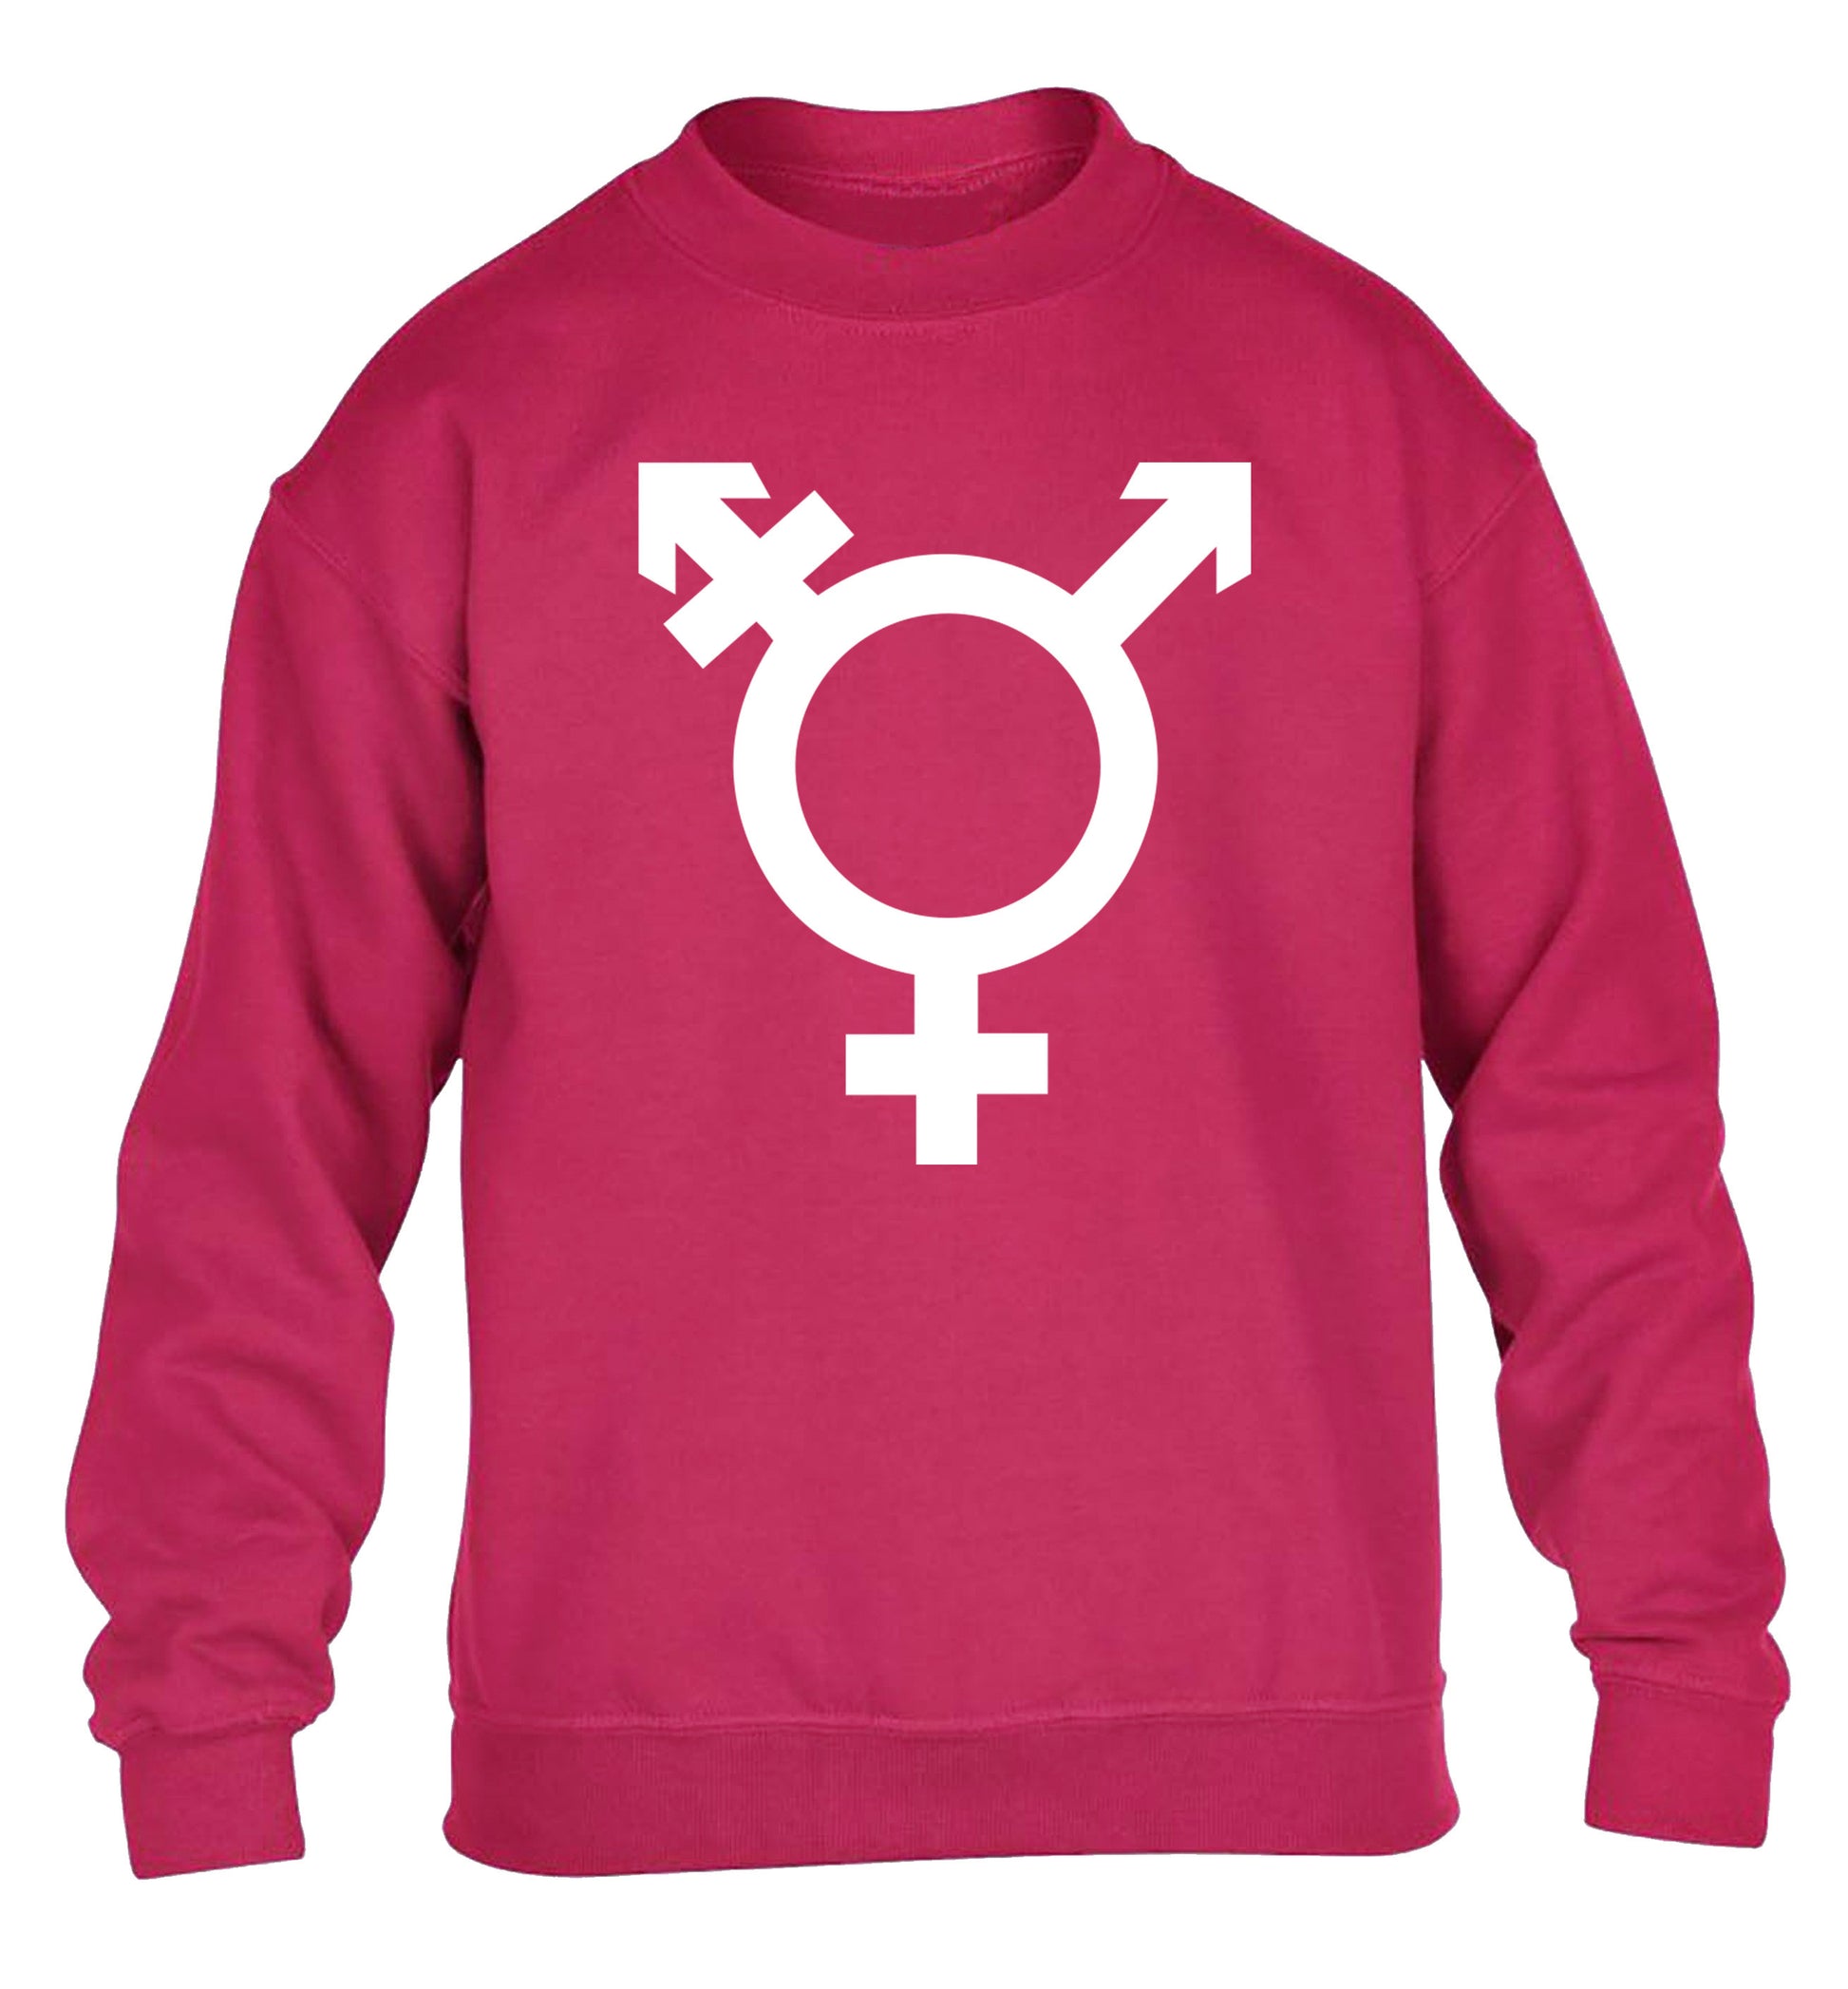 Gender neutral symbol large children's pink sweater 12-14 Years